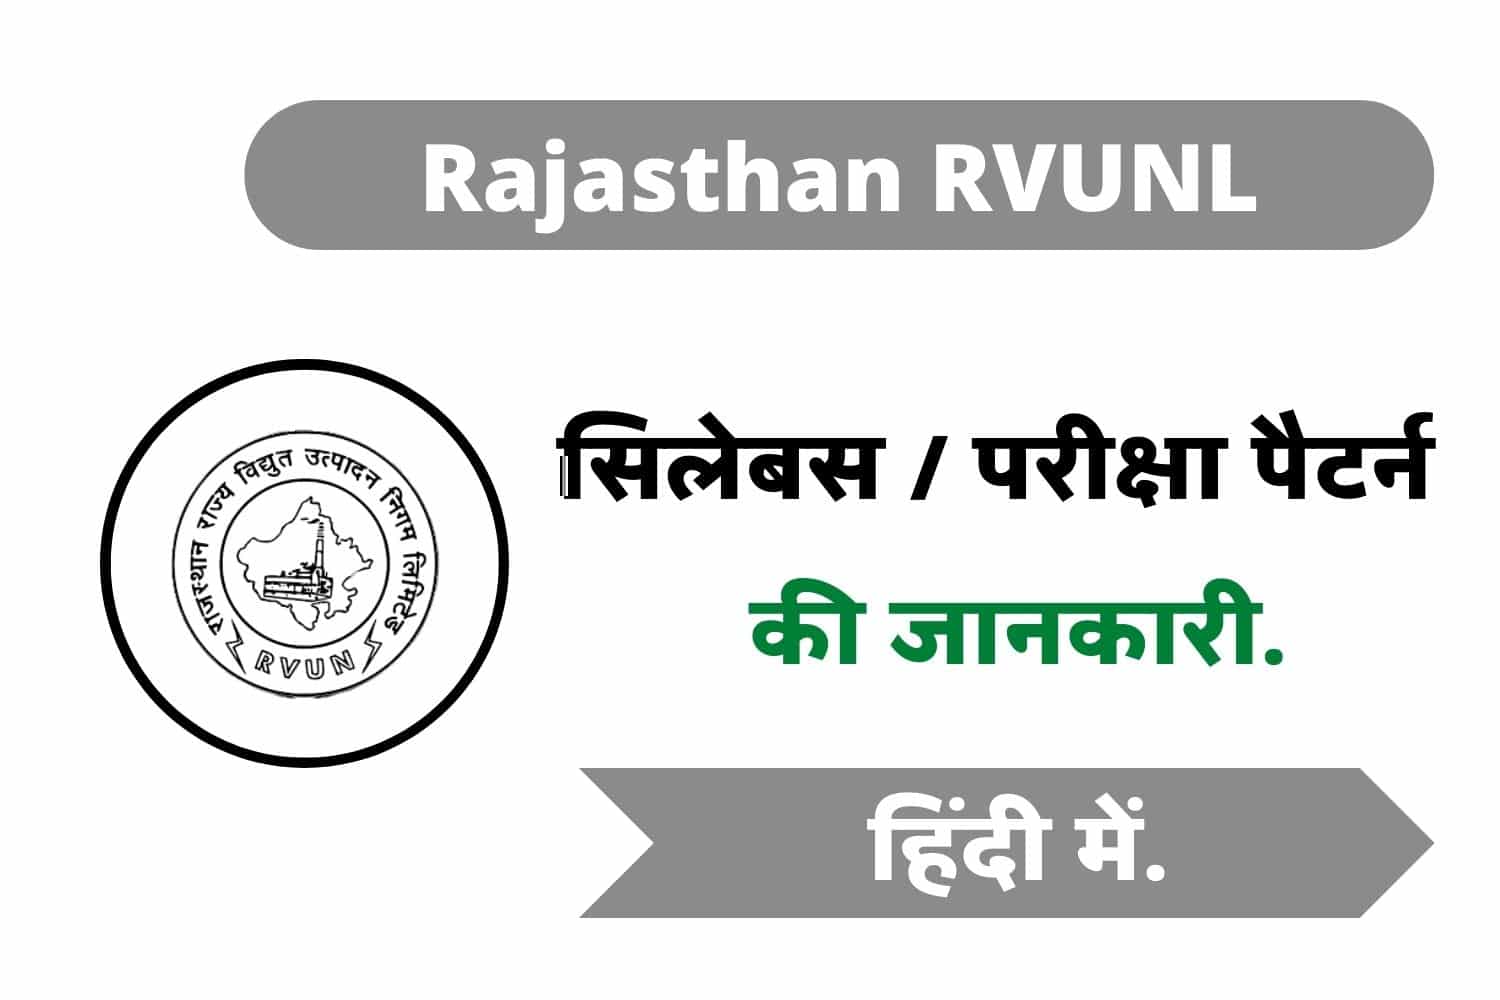 Rajasthan RVUNL Syllabus In Hindi | राजस्थान RVUNL सिलेबस इन हिंदी